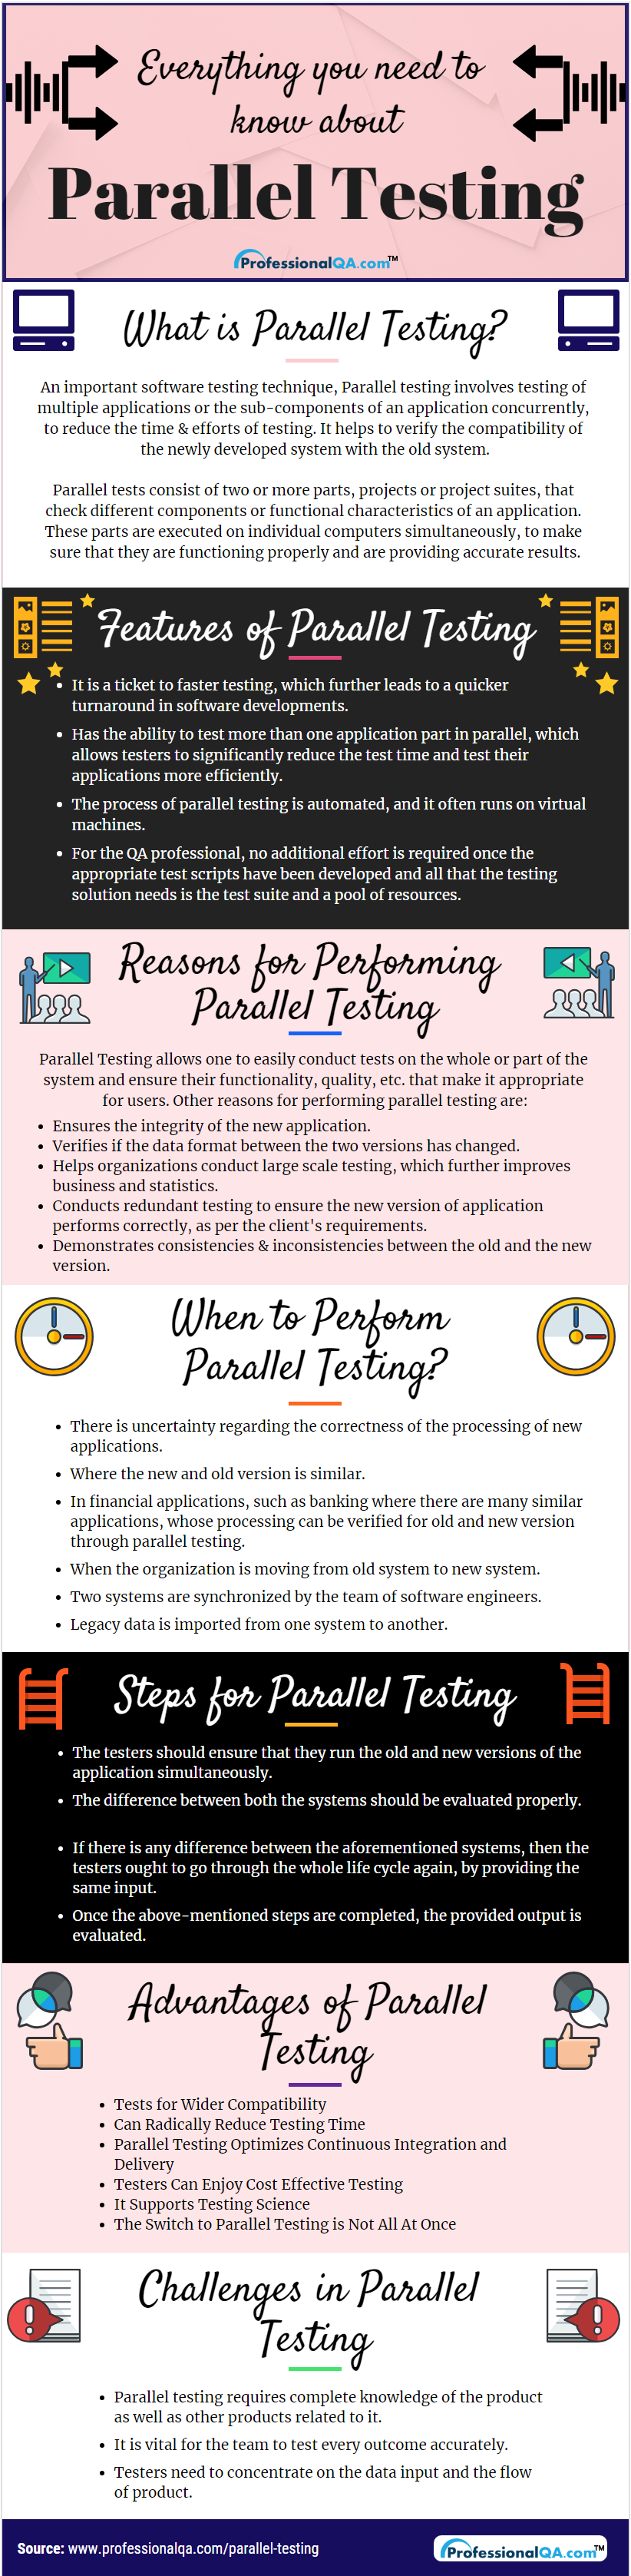 Parallel Testing